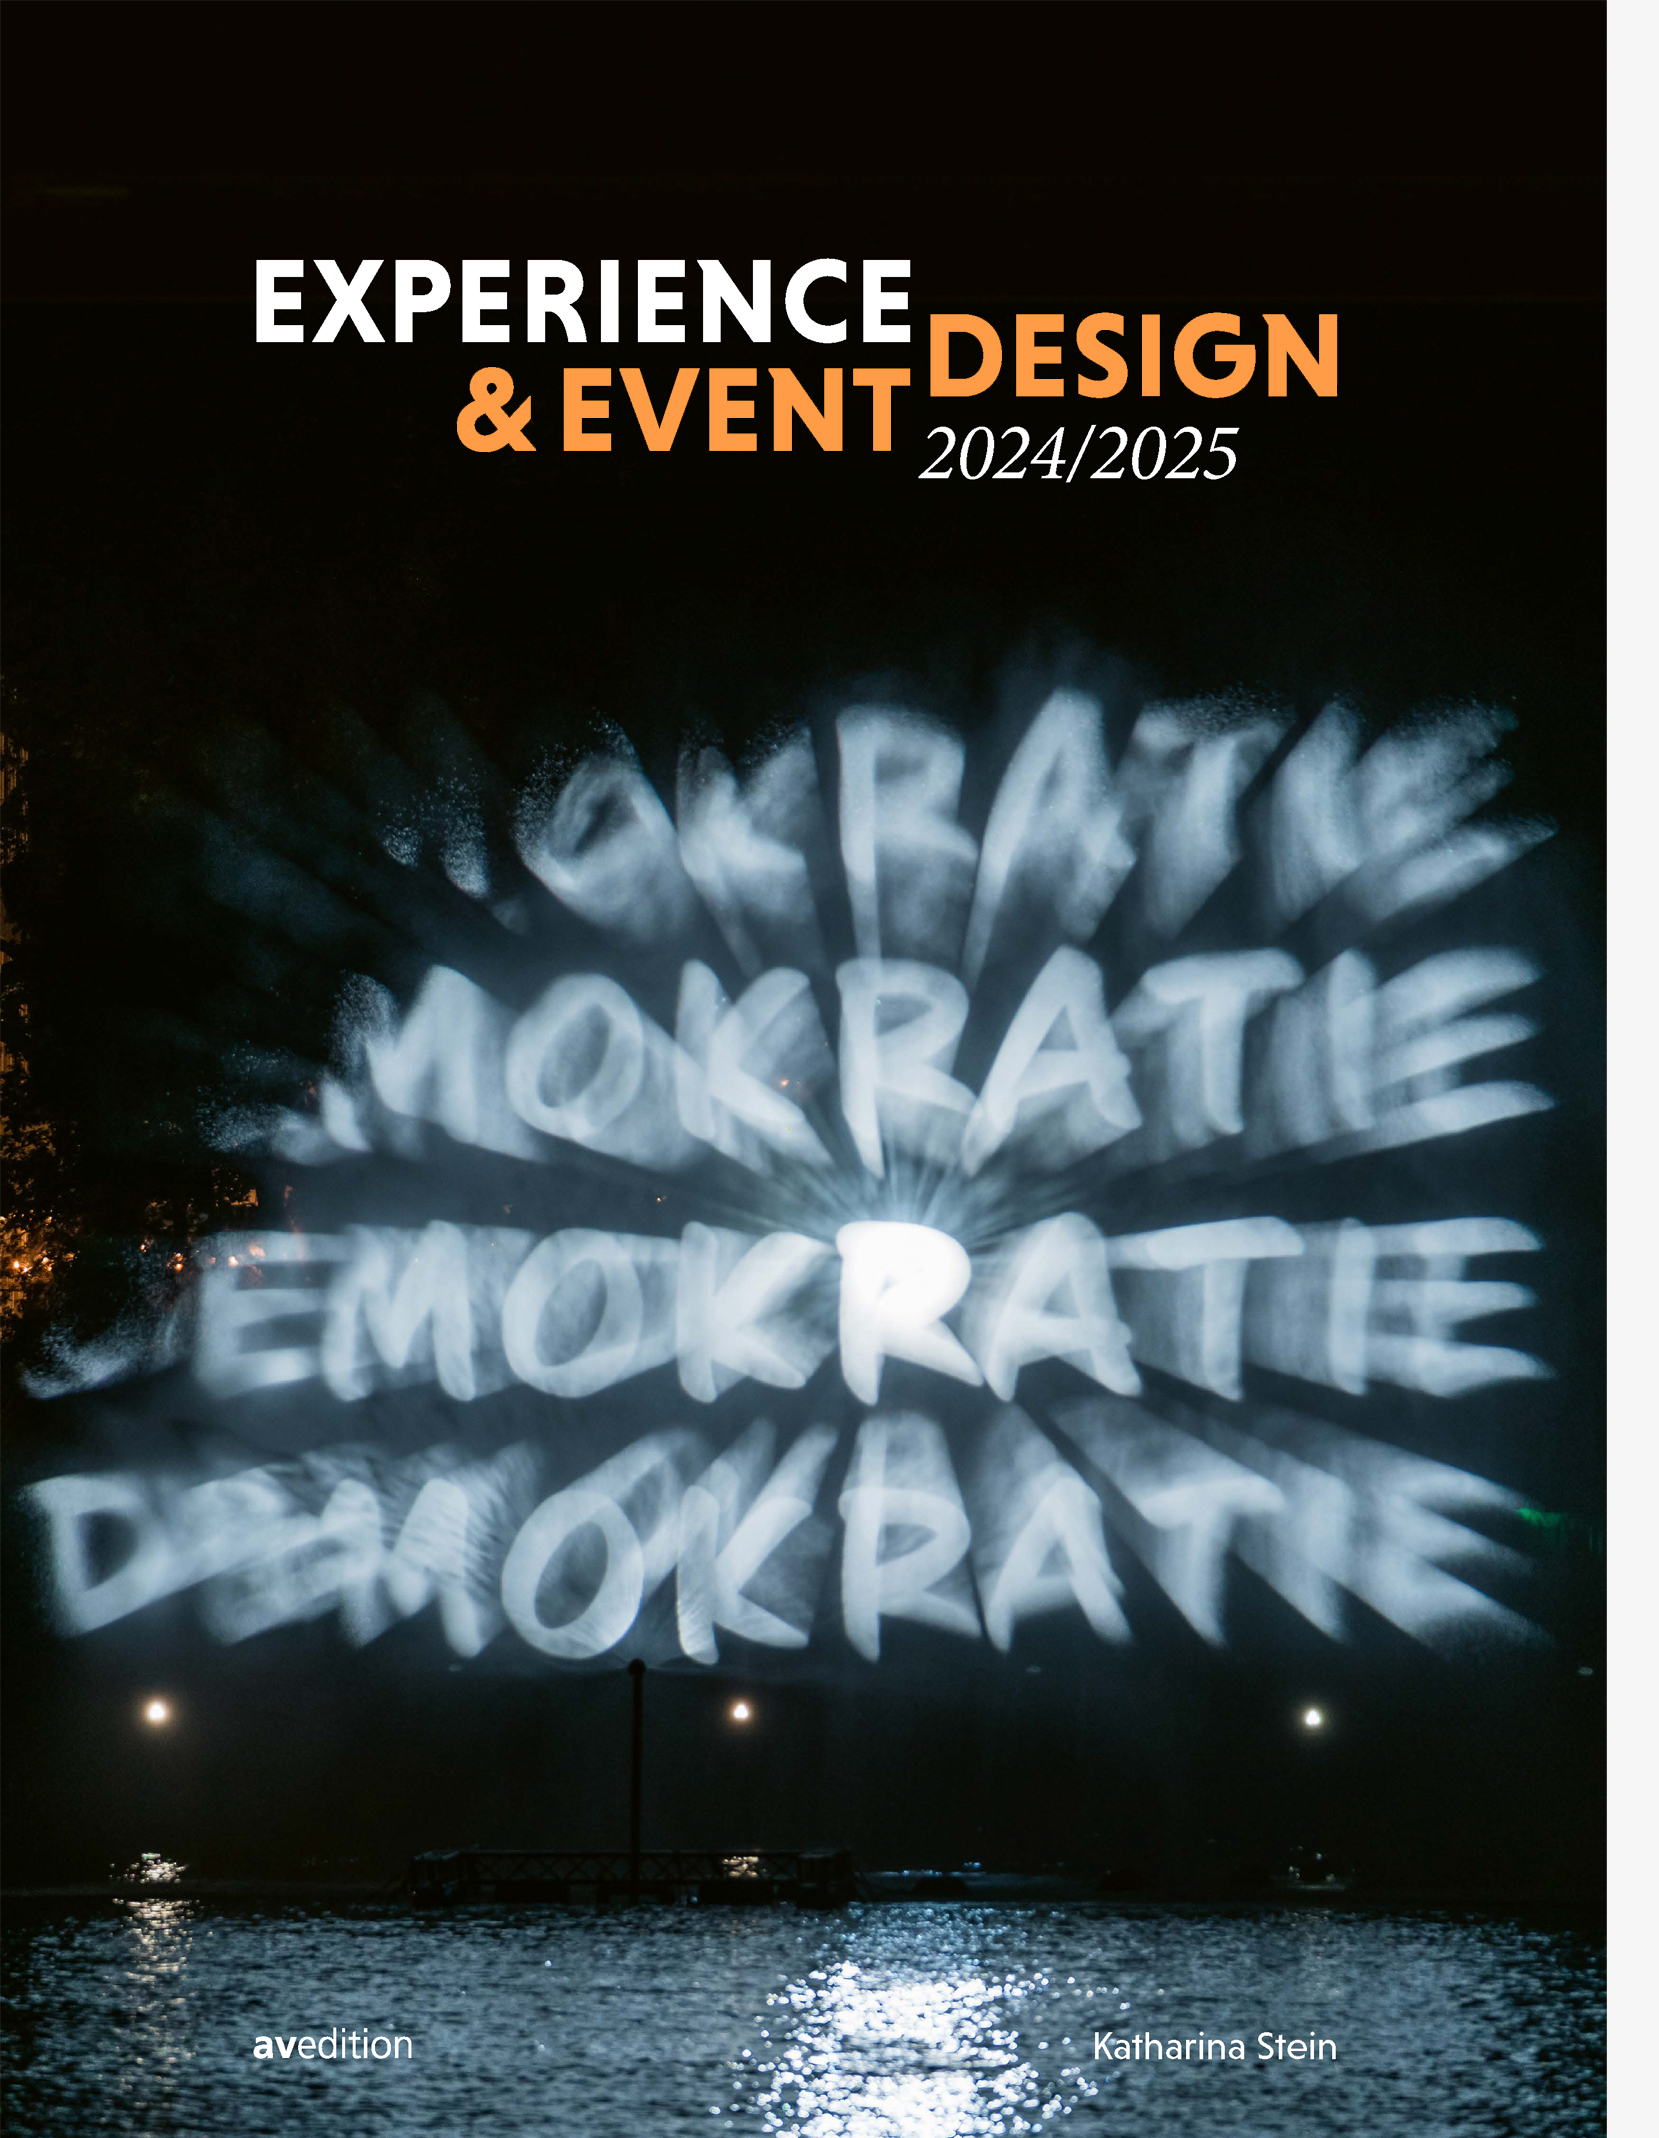 Experience & Event Design 2024/2025